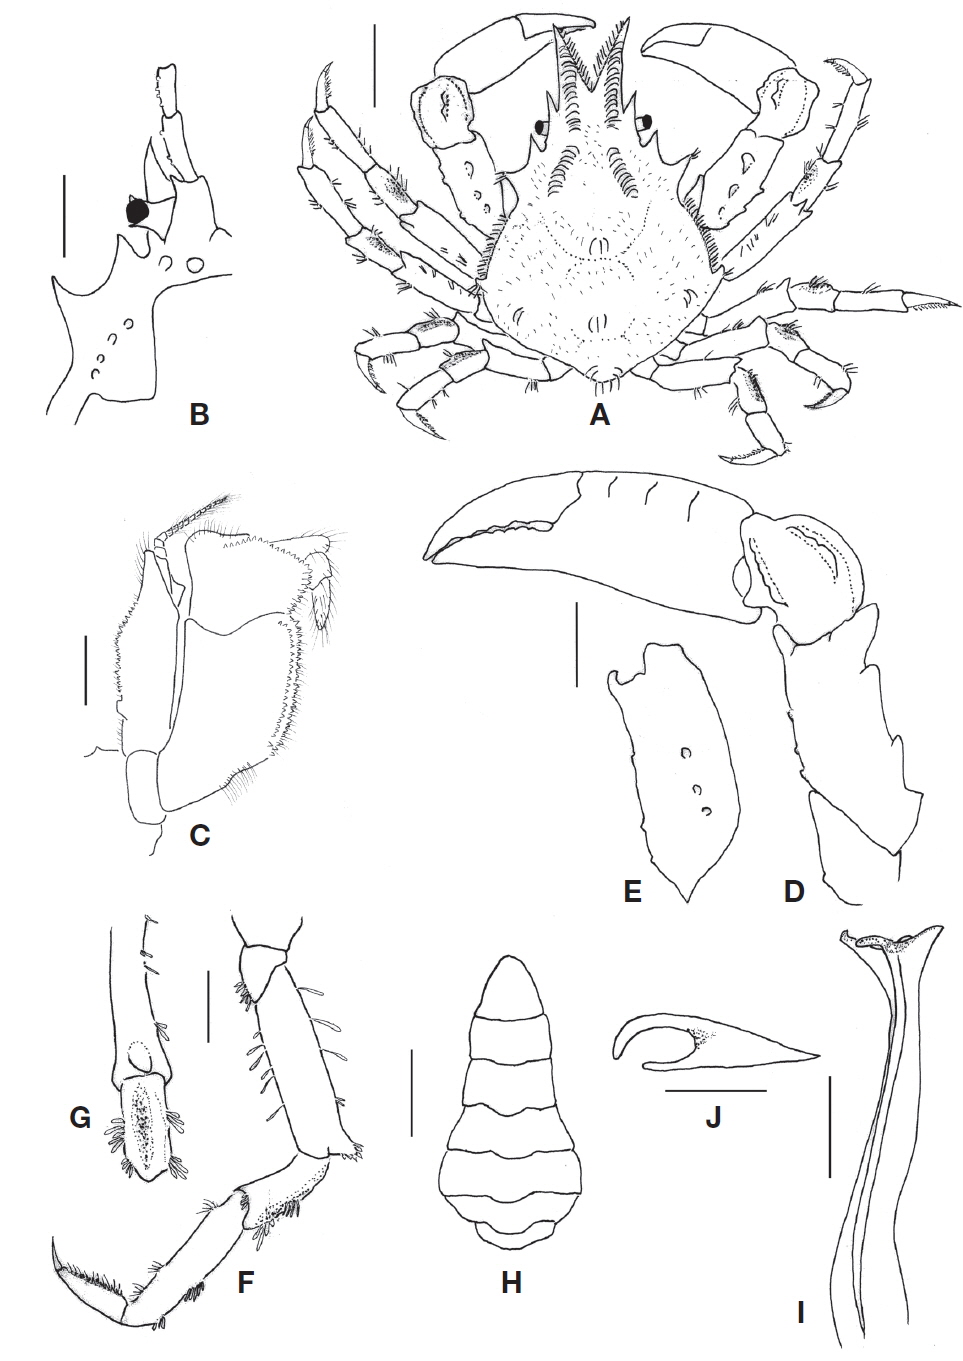 Pugettia vulgaris Ohtsuchi, Kawamura, and Takeda, 2014, male (CL 22.1 mm, CW 14.2 mm). A, Dorsal view; B, Right anterior carapace, ventral view; C, Right third maxilliped, ventral view; D, Right cheliped, inner view; E, Merus of right cheliped, ventral view; F, Right ambulatory leg 1, outer view; G, Merus and carpus of right ambulatory leg 1, upper view; H, Abdomen; I, Left gonopod 1, ventral view; J, Distal part of left gonopod 1, upper view. Scale bars: A, B=5 mm, C, I=1 mm, D-H=2.5 mm, J=0.5 mm.